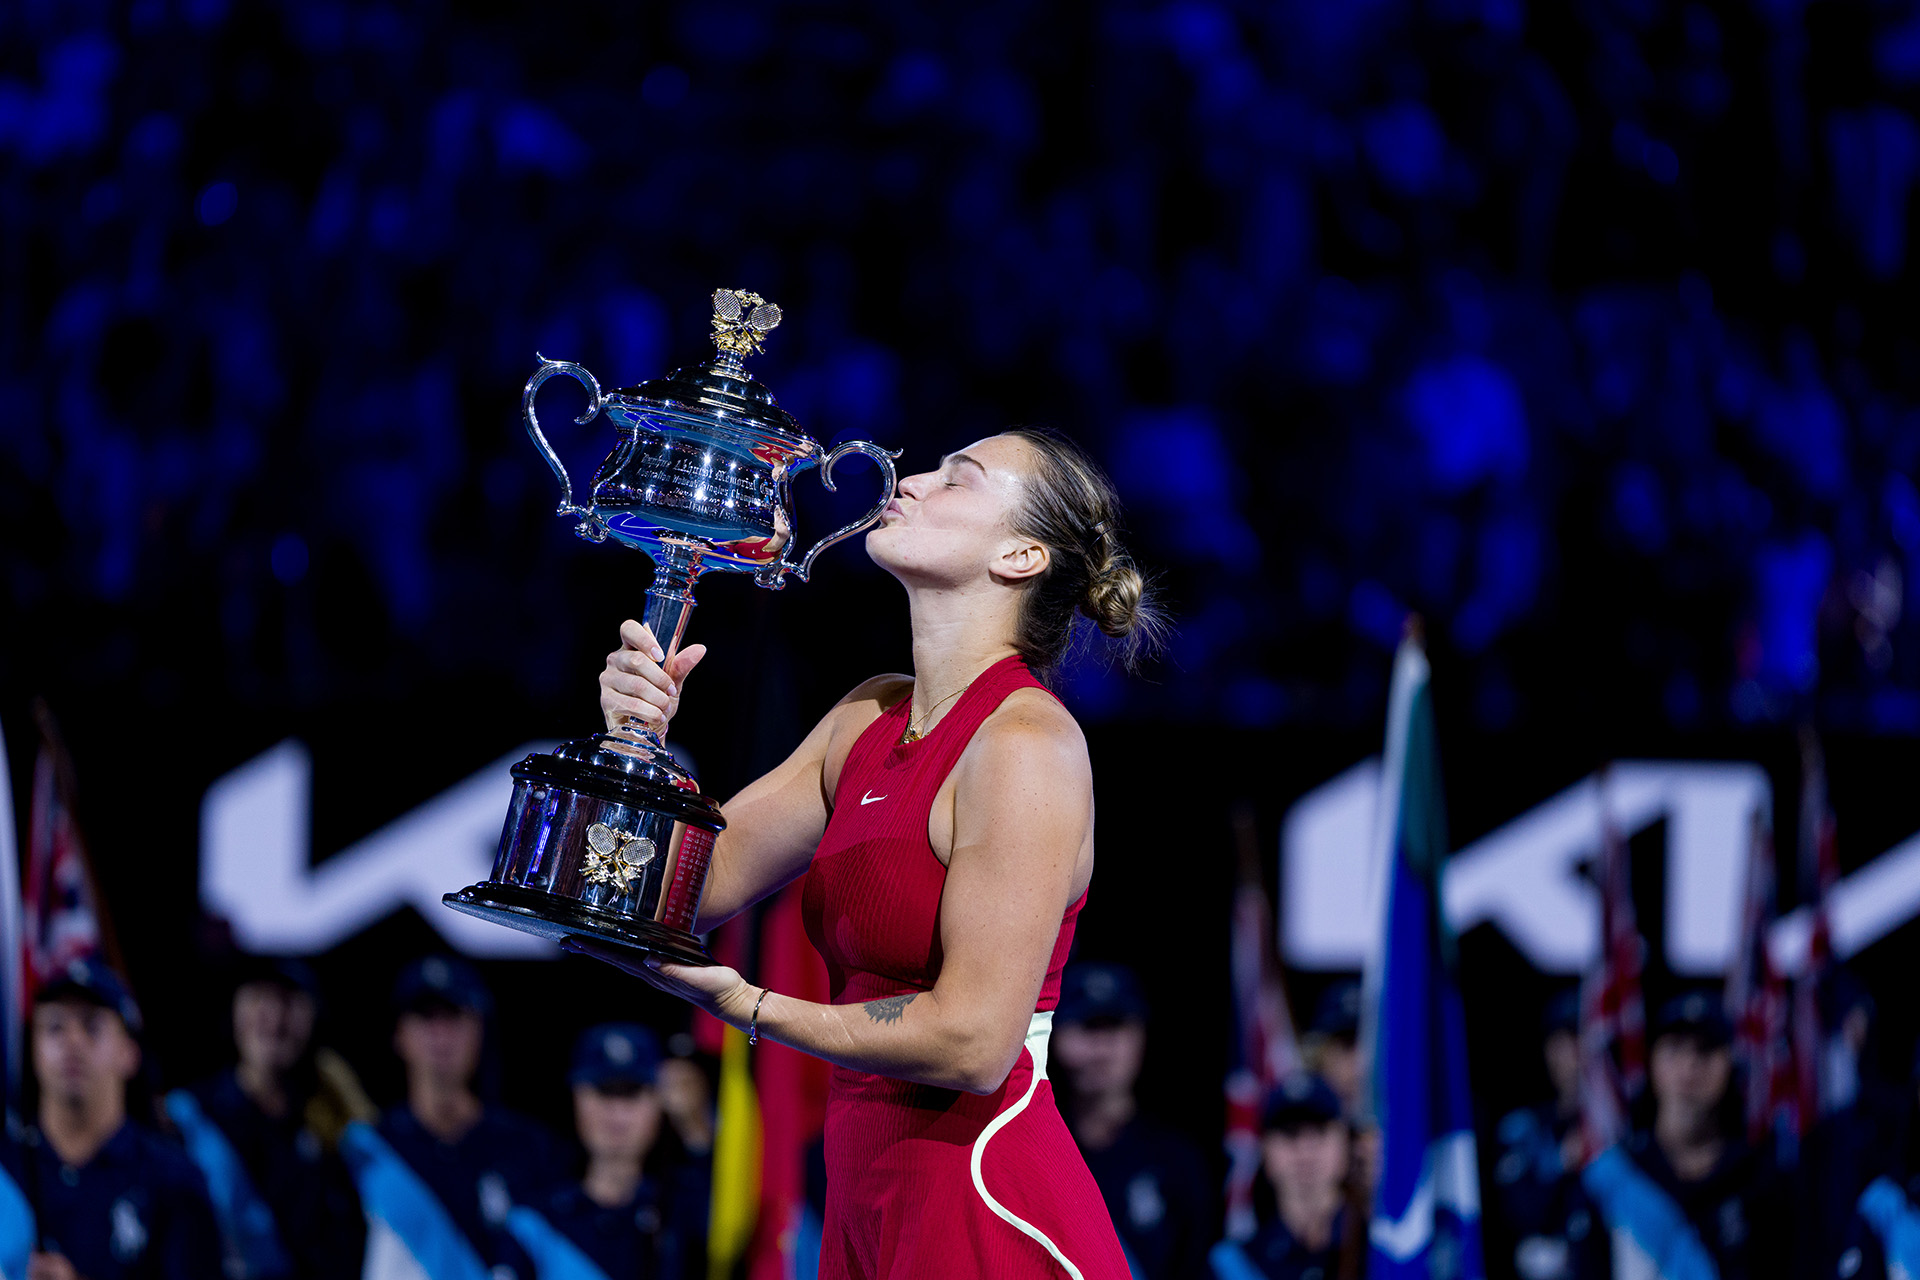 Драма Медведева, поражение Рублева и доминирование Соболенко — итоги Australian Open